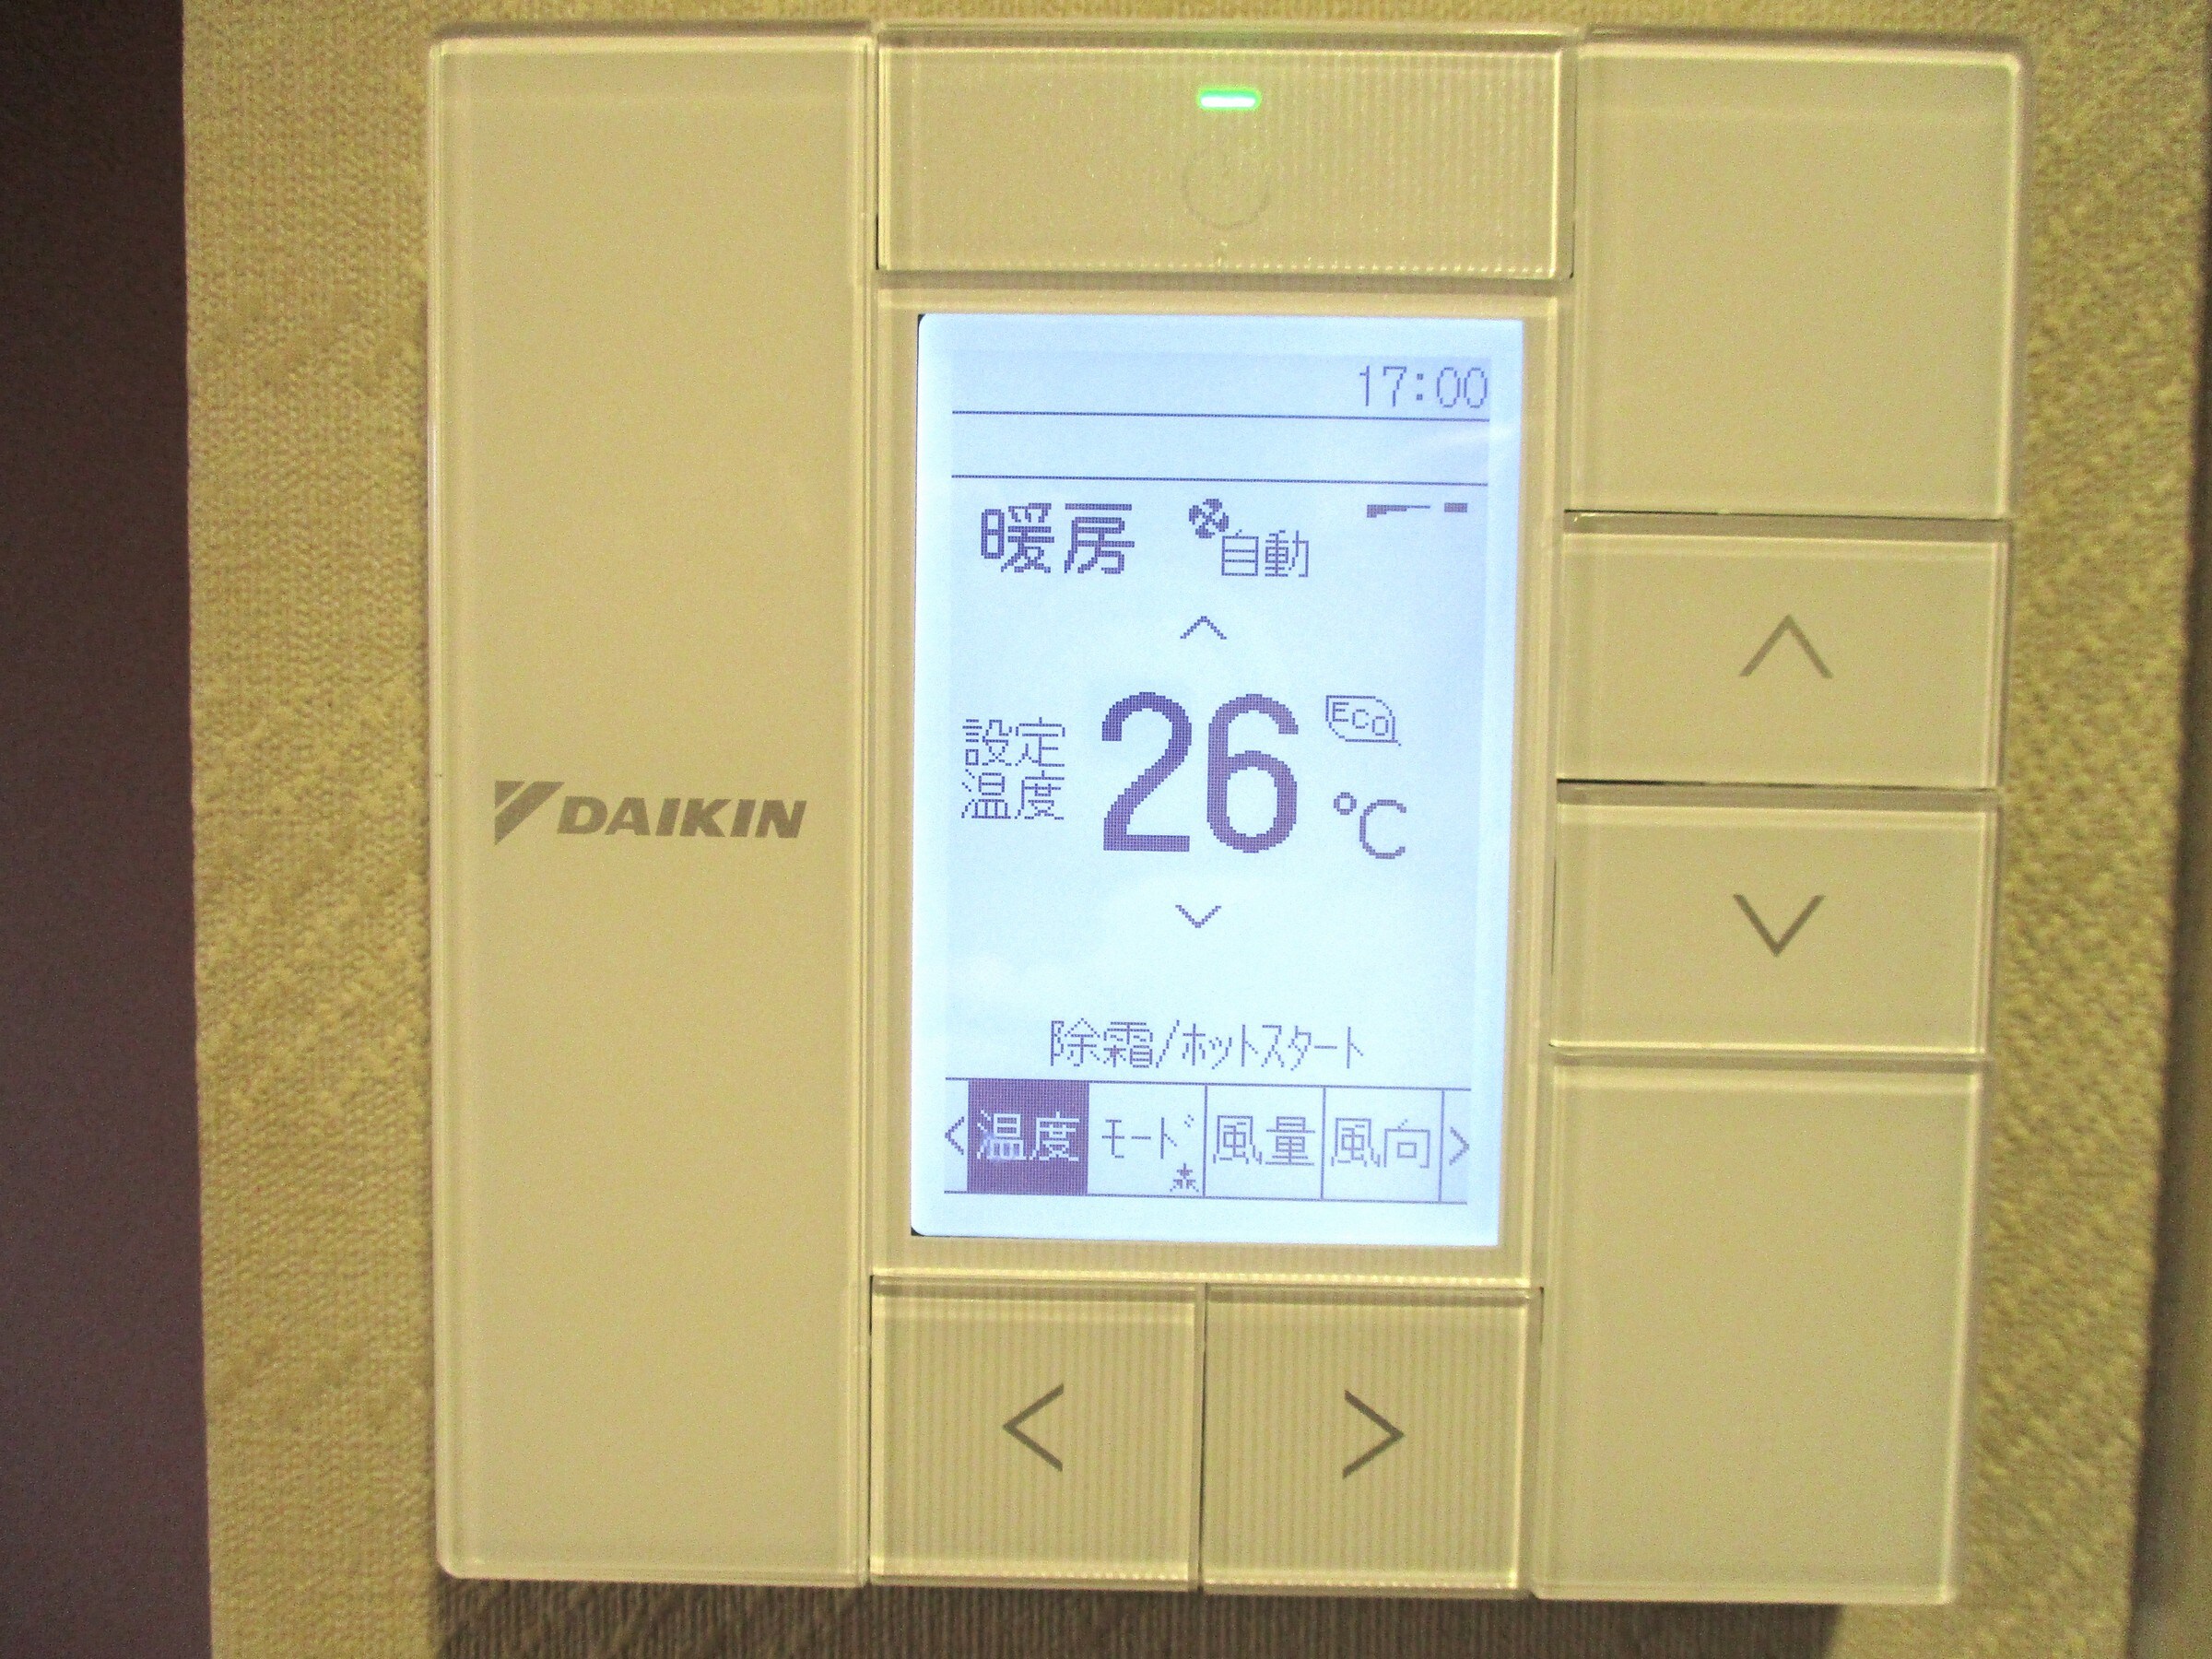 Air conditioning remote control